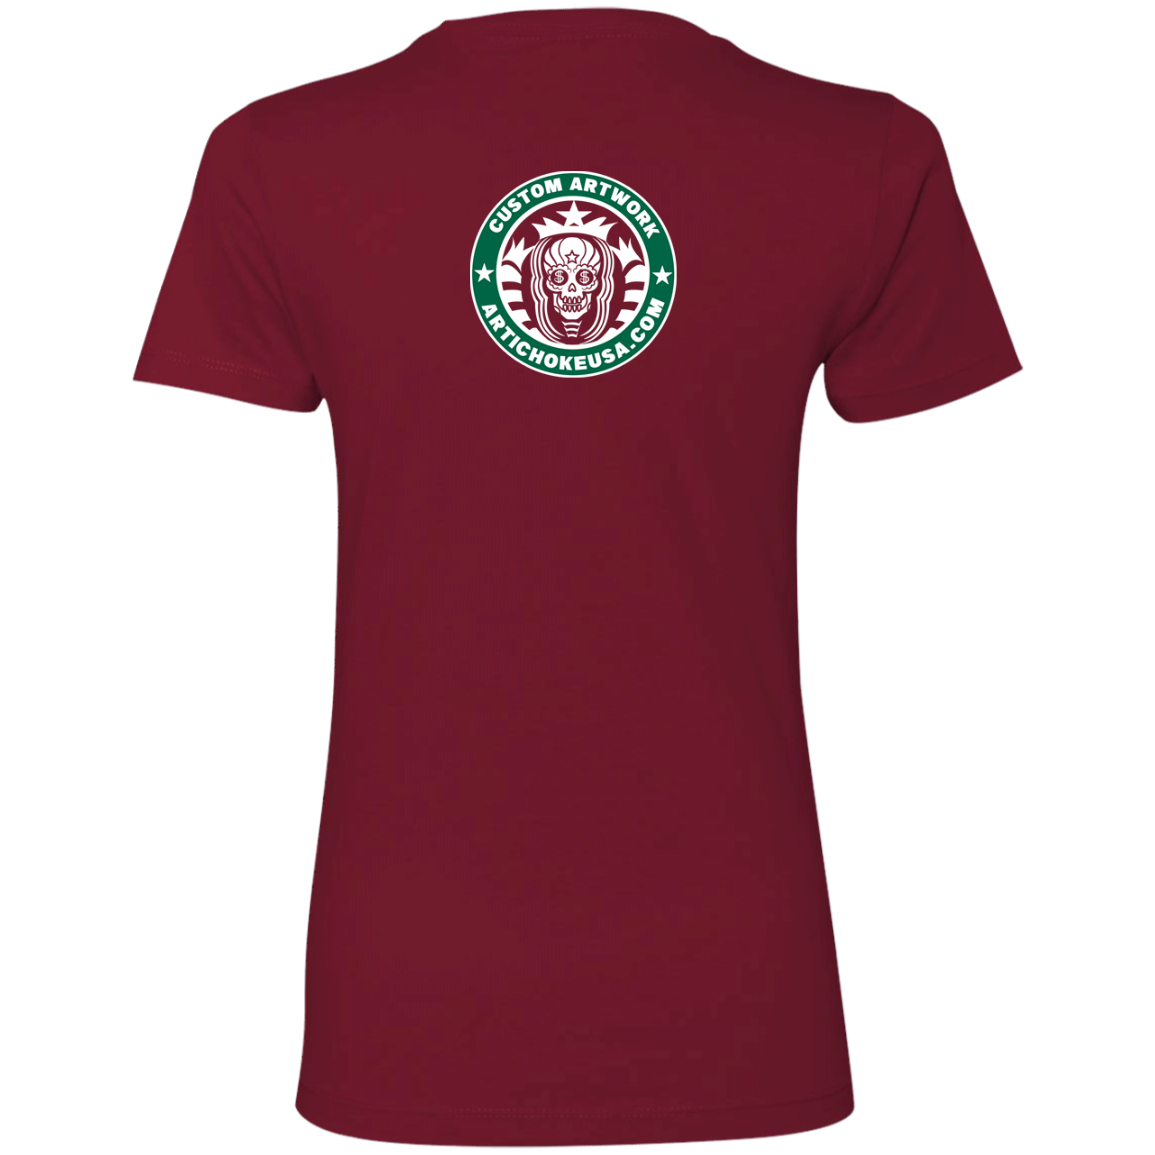 ArtichokeUSA Custom Design. Money Can't Buy Happiness But It Can Buy You Coffee. Ladies' Boyfriend T-Shirt